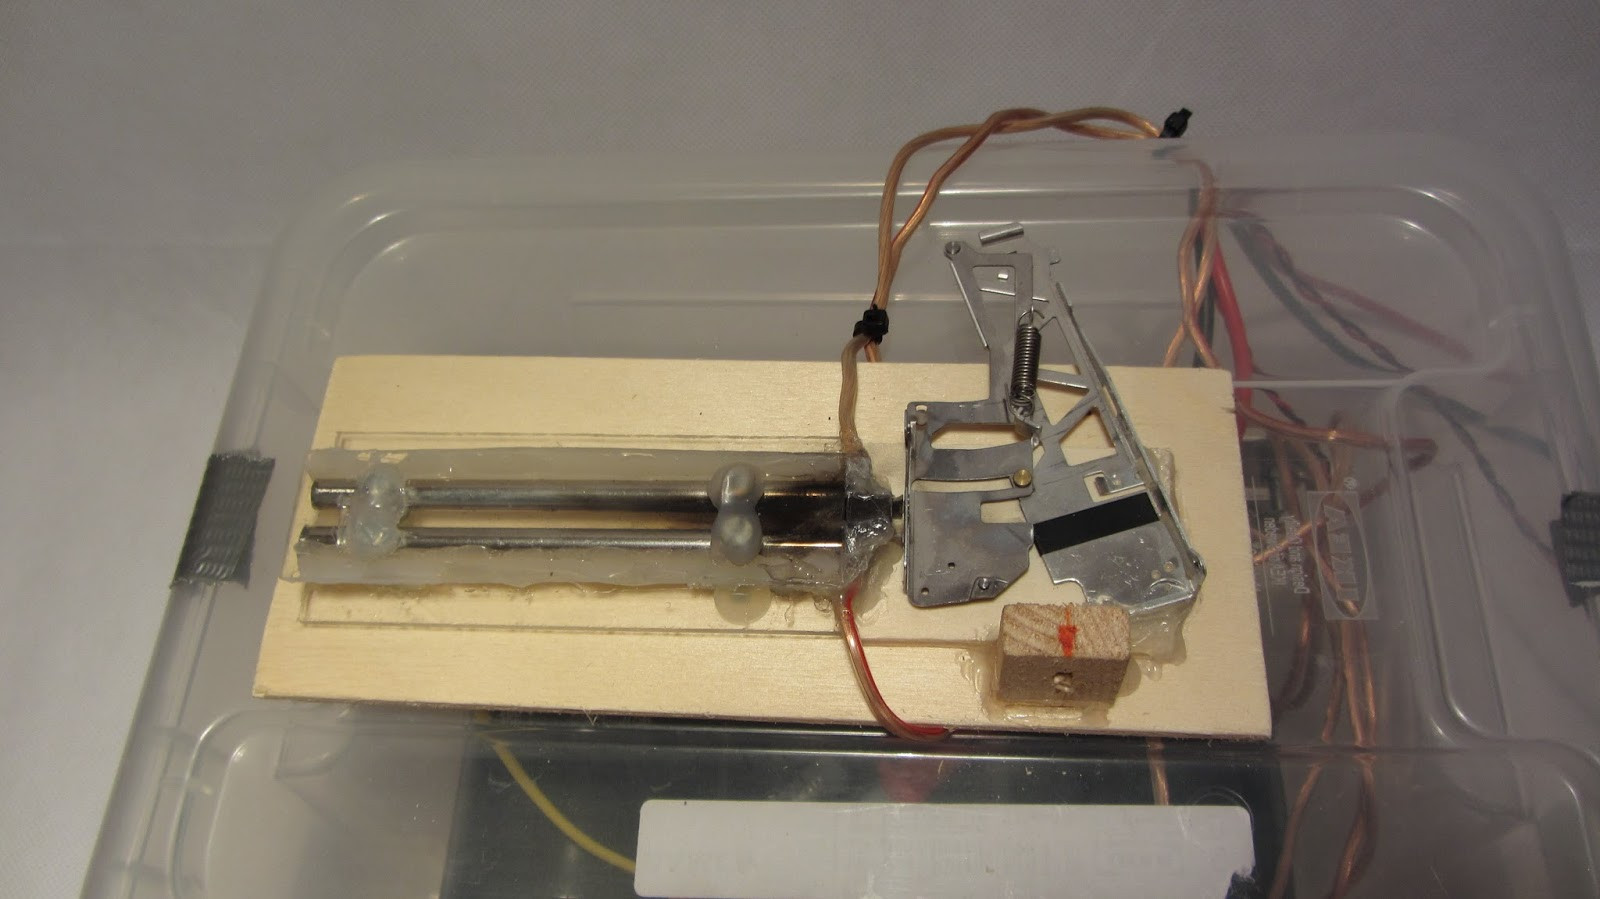 Best ideas about DIY Rail Gun
. Save or Pin Do It Yourself Gad s Homemade Railgun Experiment Now.